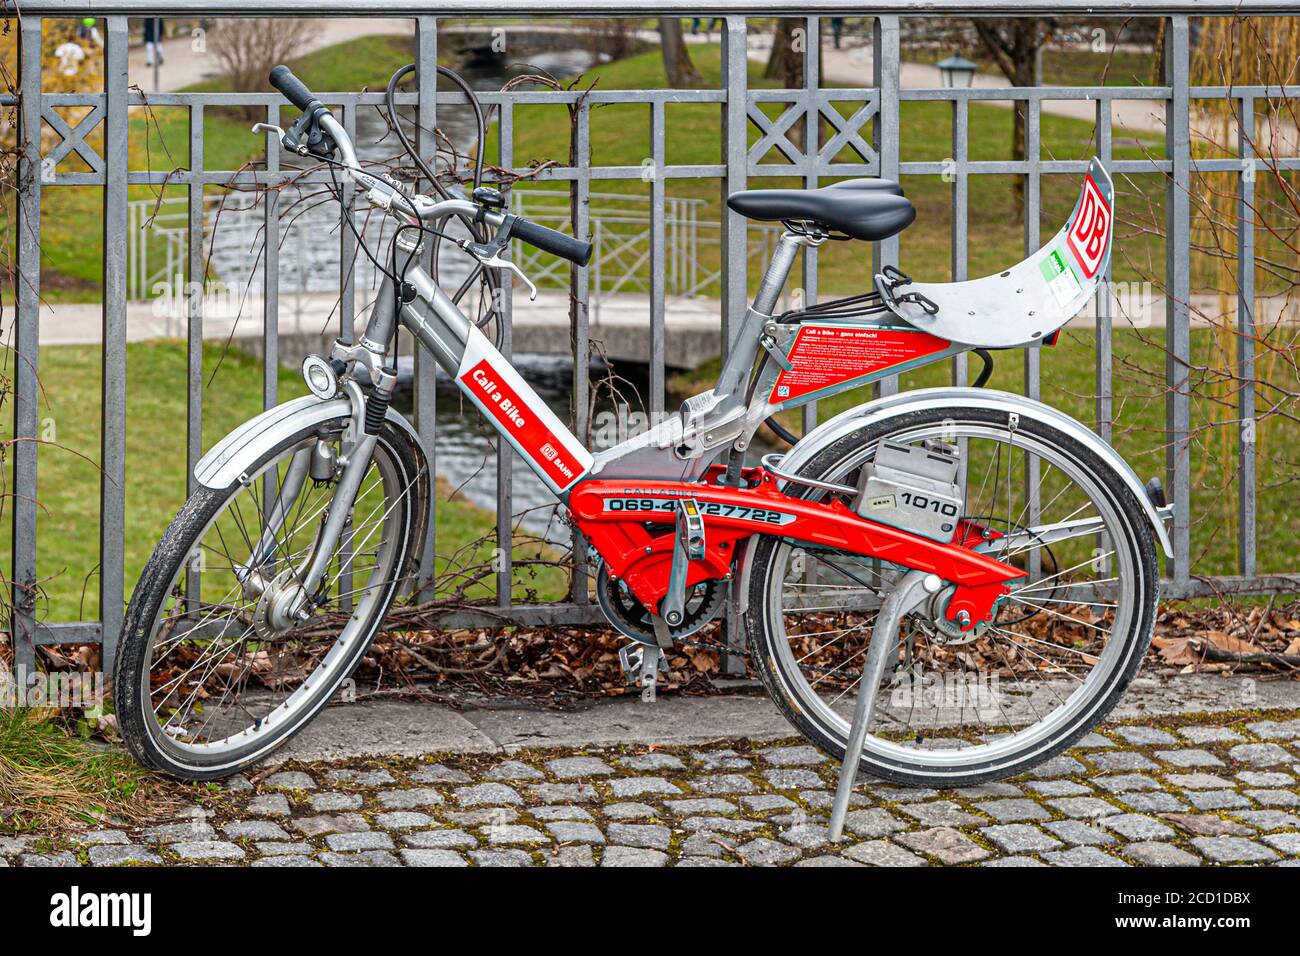 Rental bikes in Munich, Germany Stock Photo